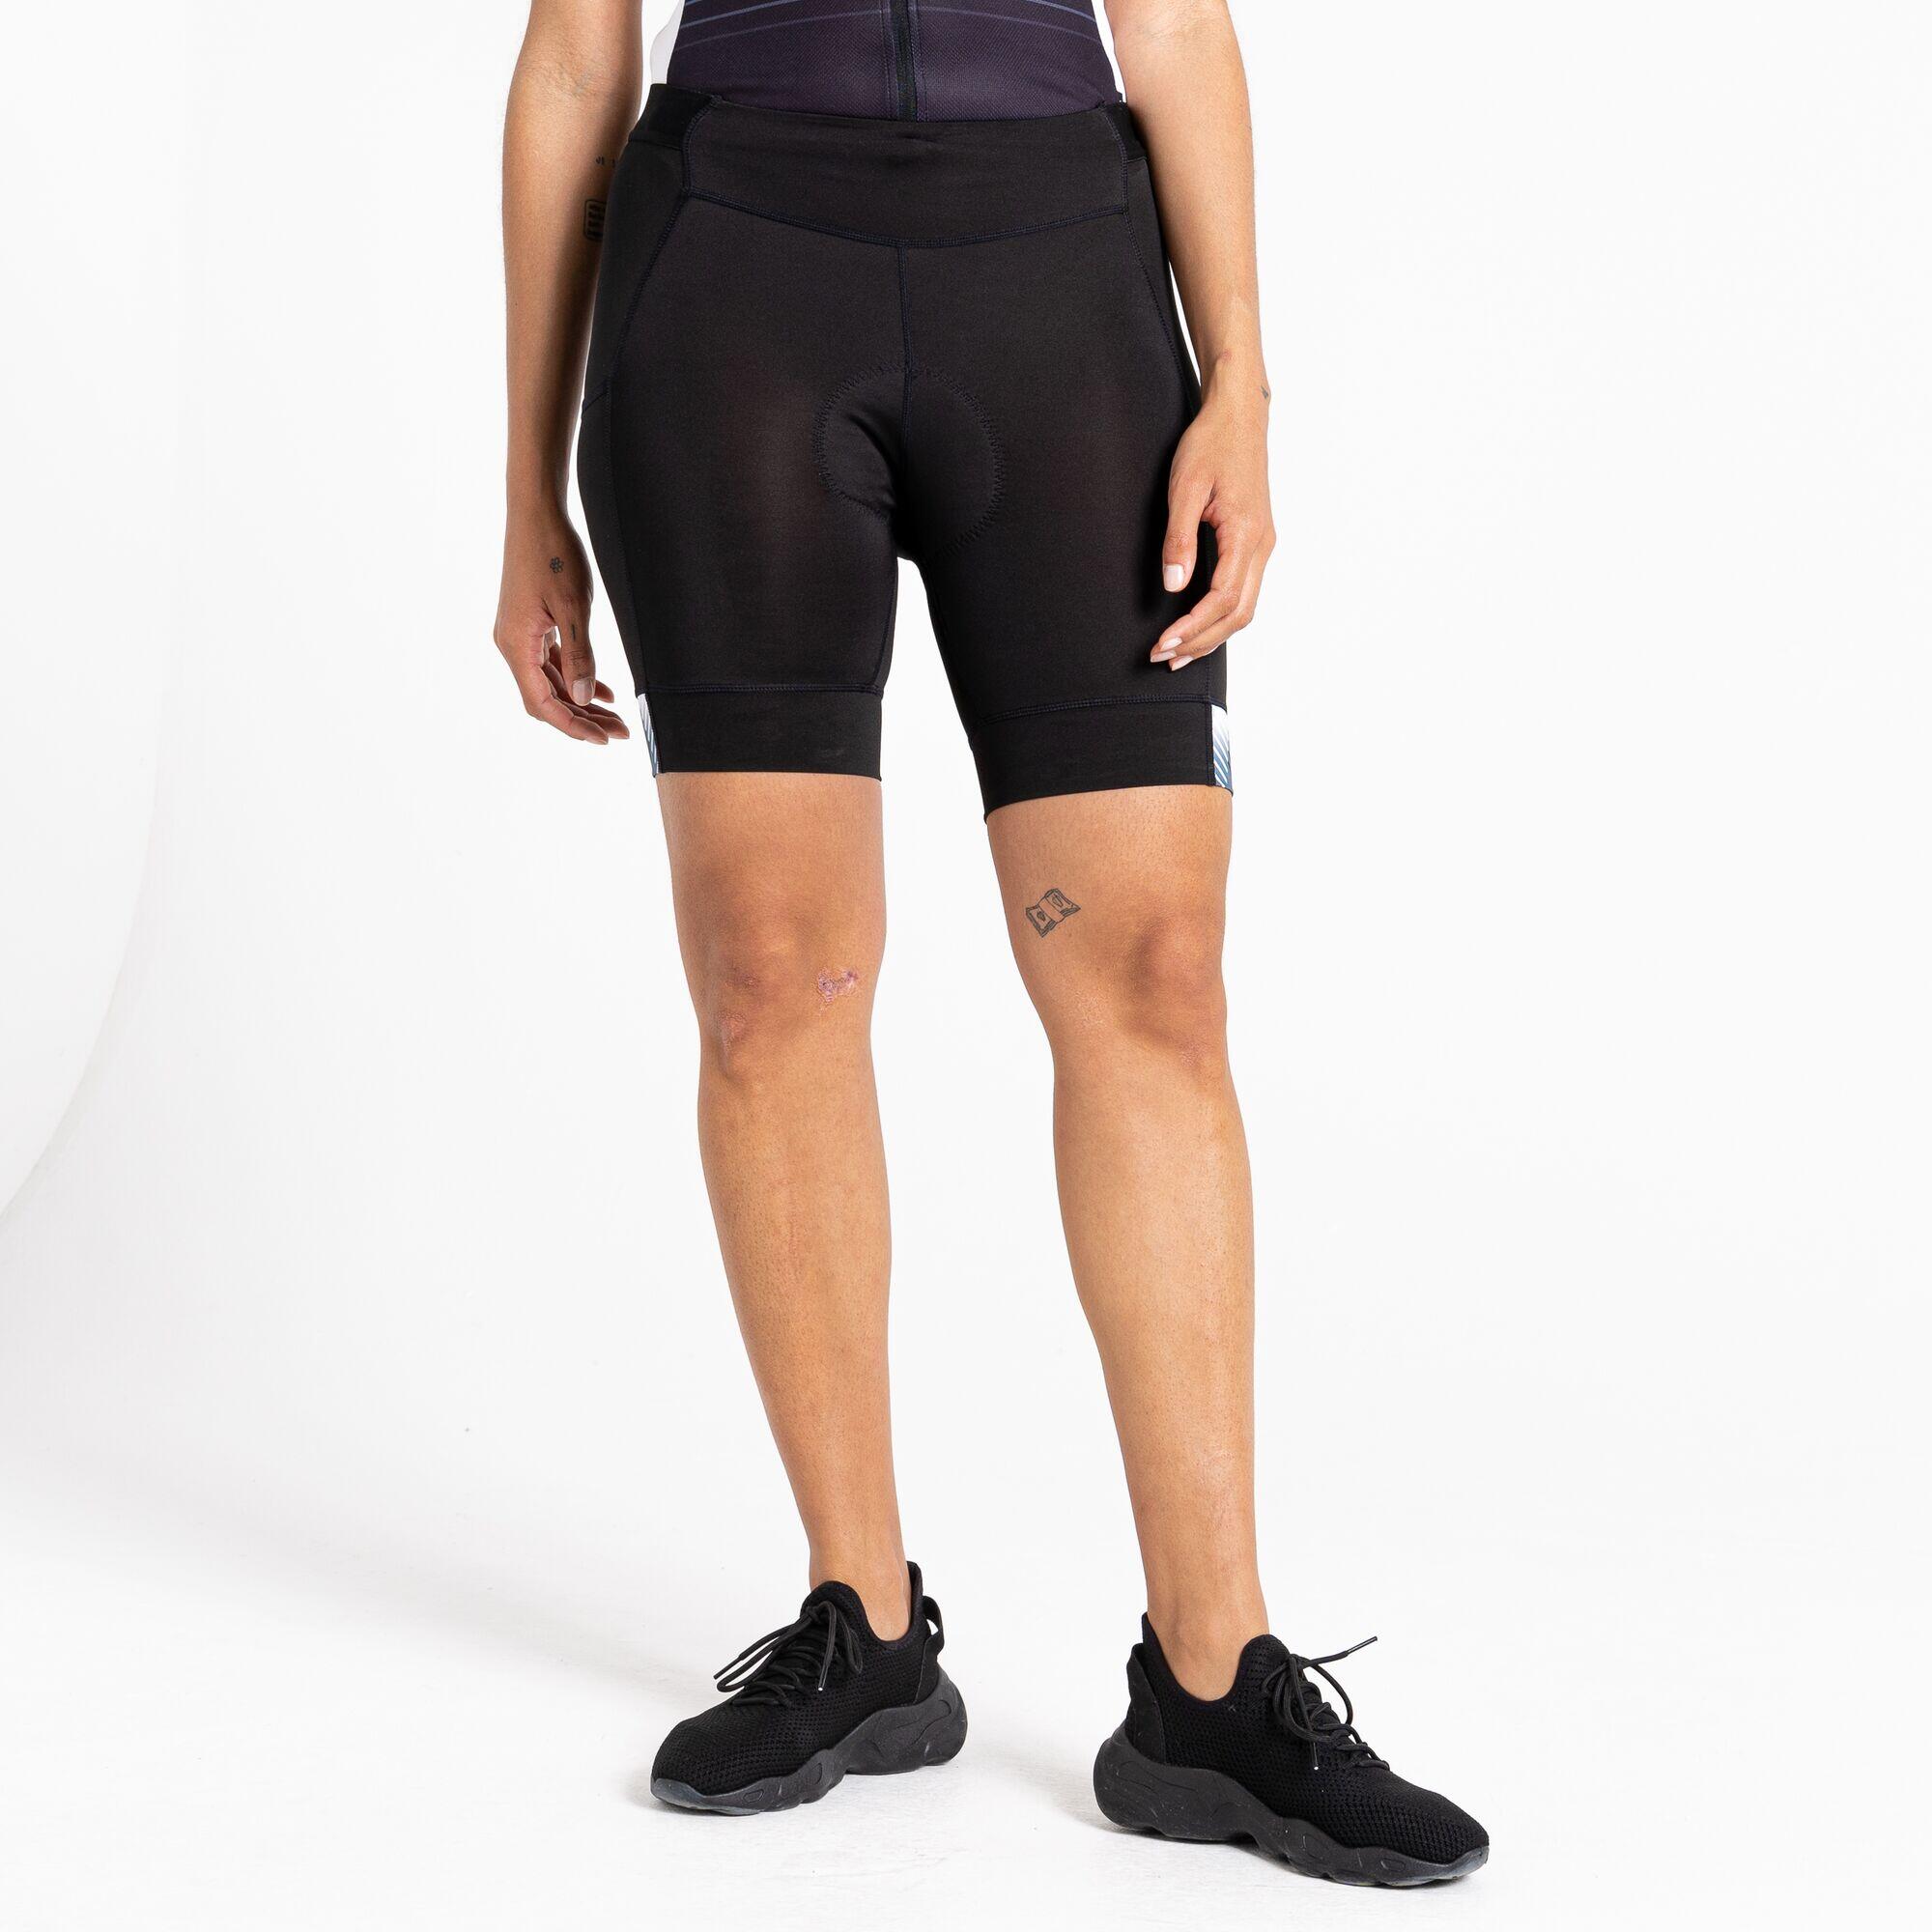 AEP Prompt Women's Fitness Shorts - Black Print 3/5